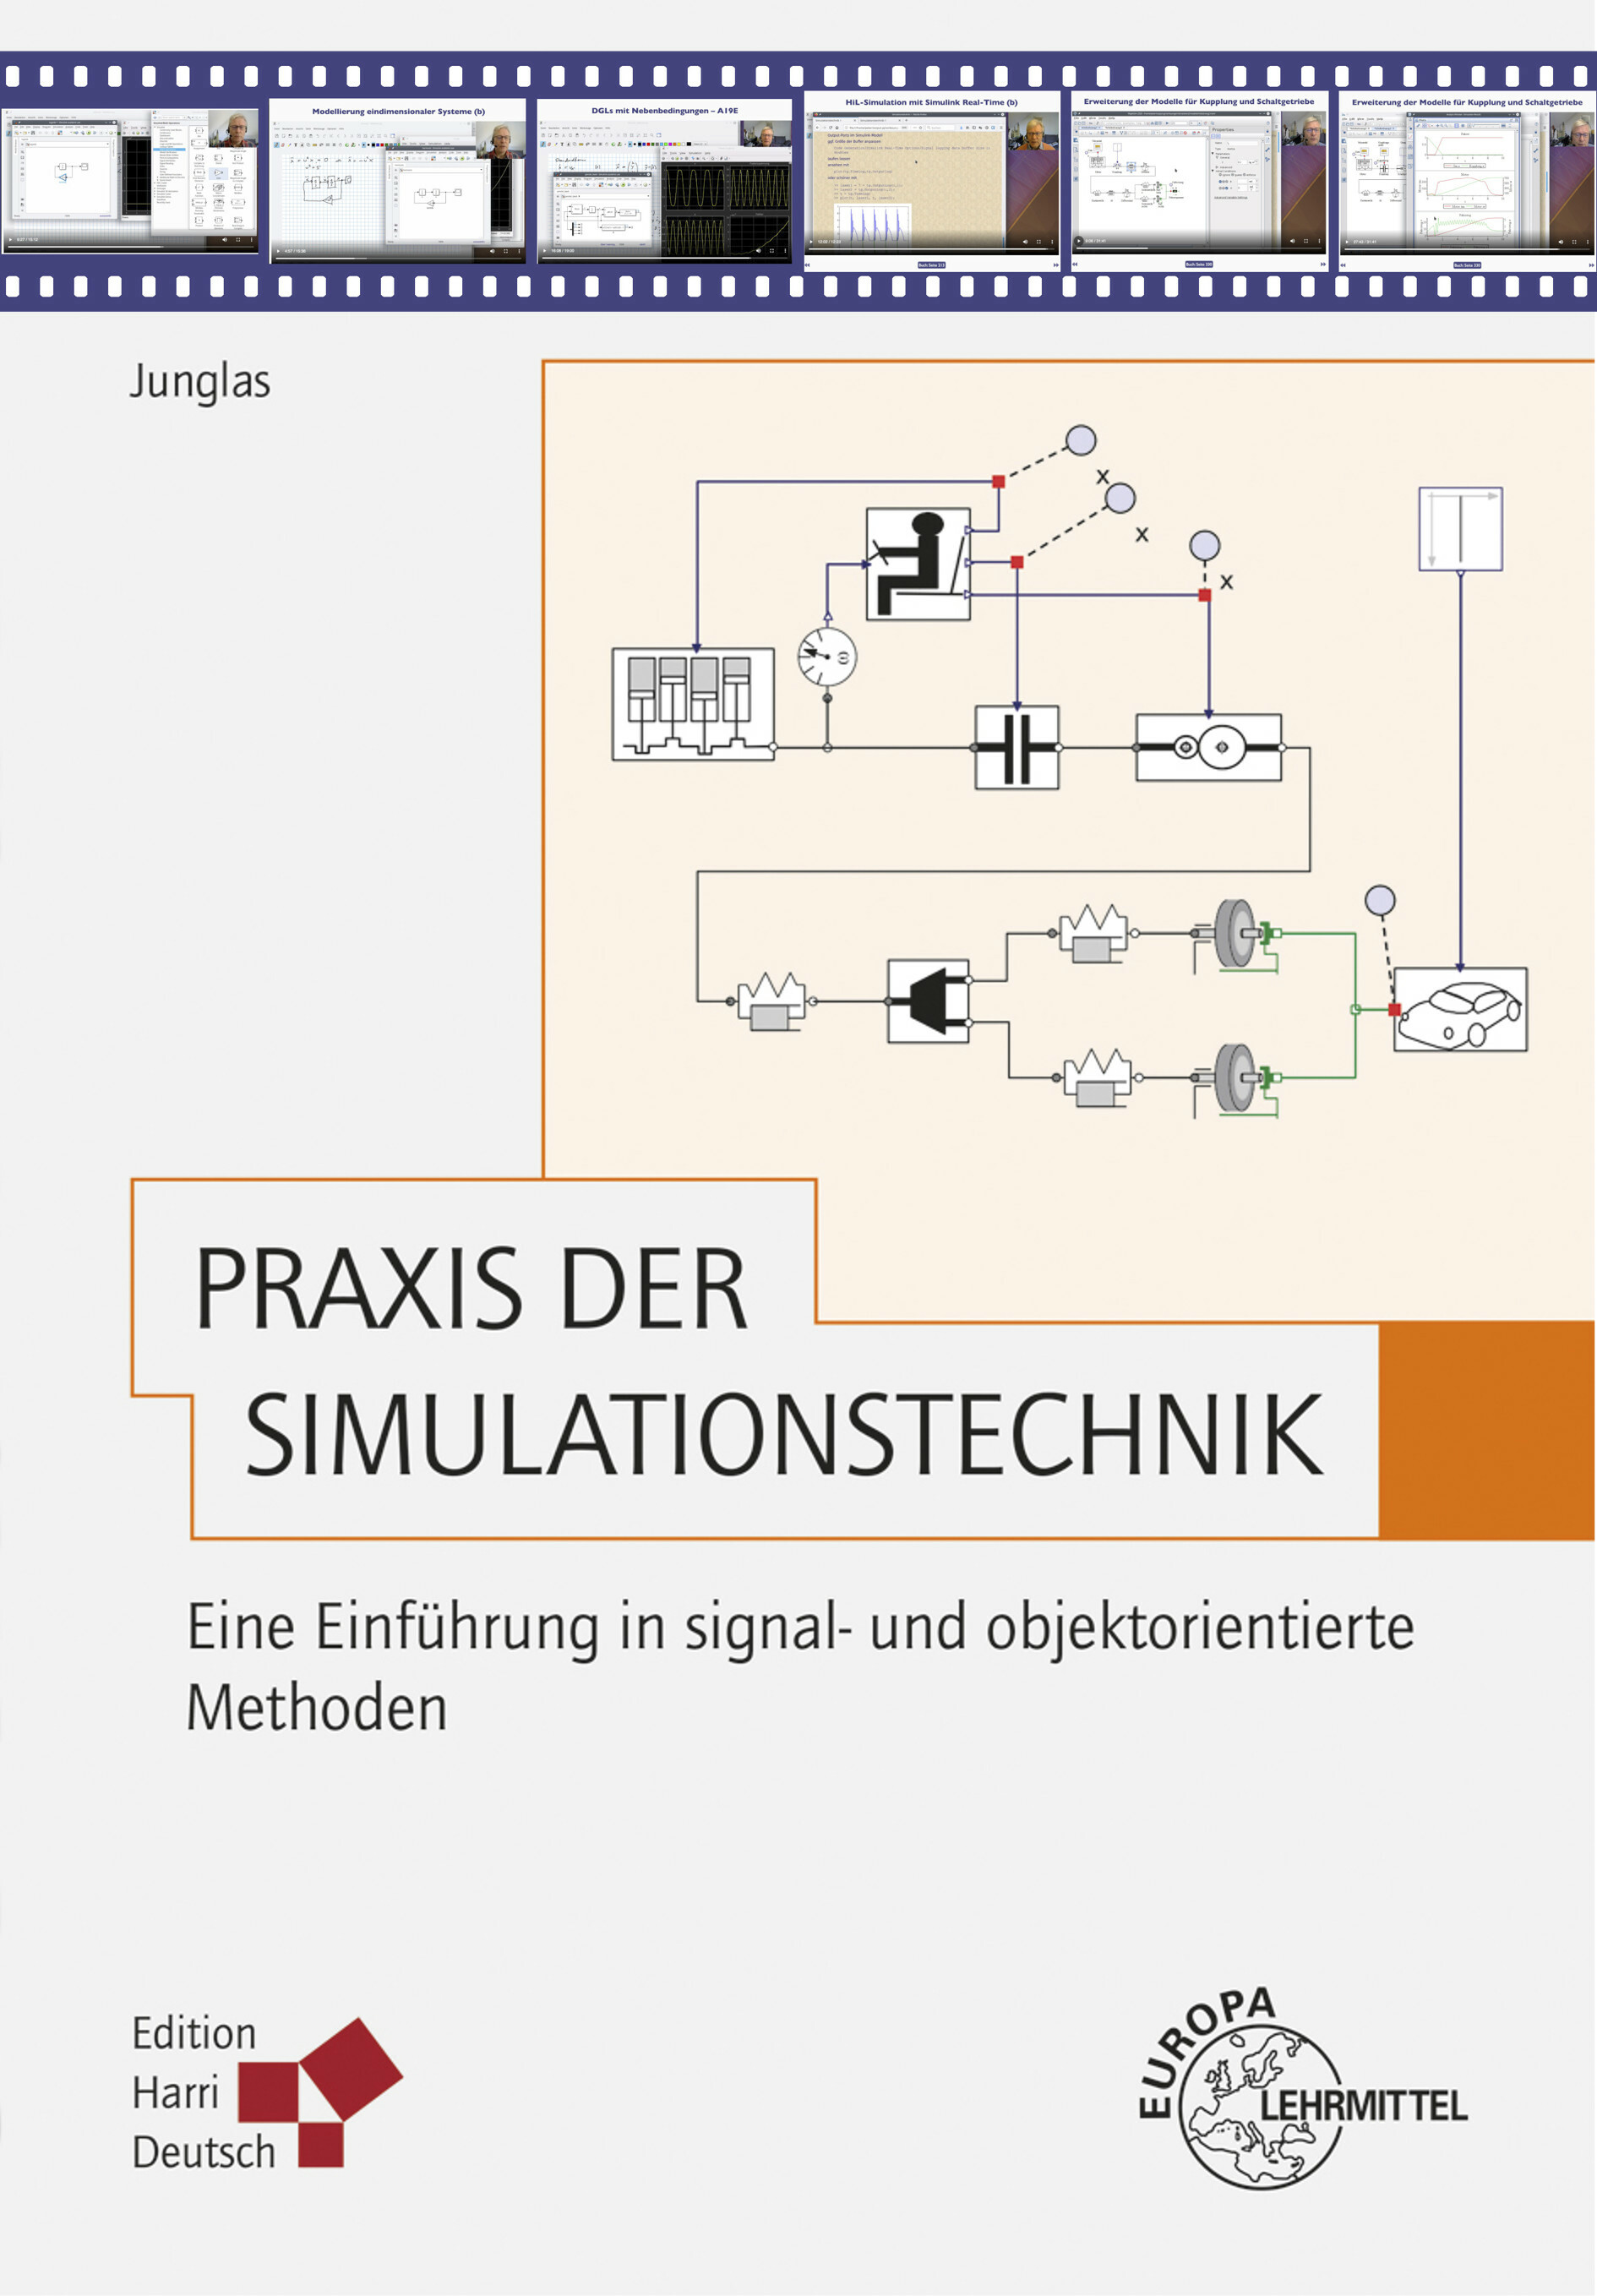 Praxis der Simulationstechnik (Junglas) - Digitales Buch